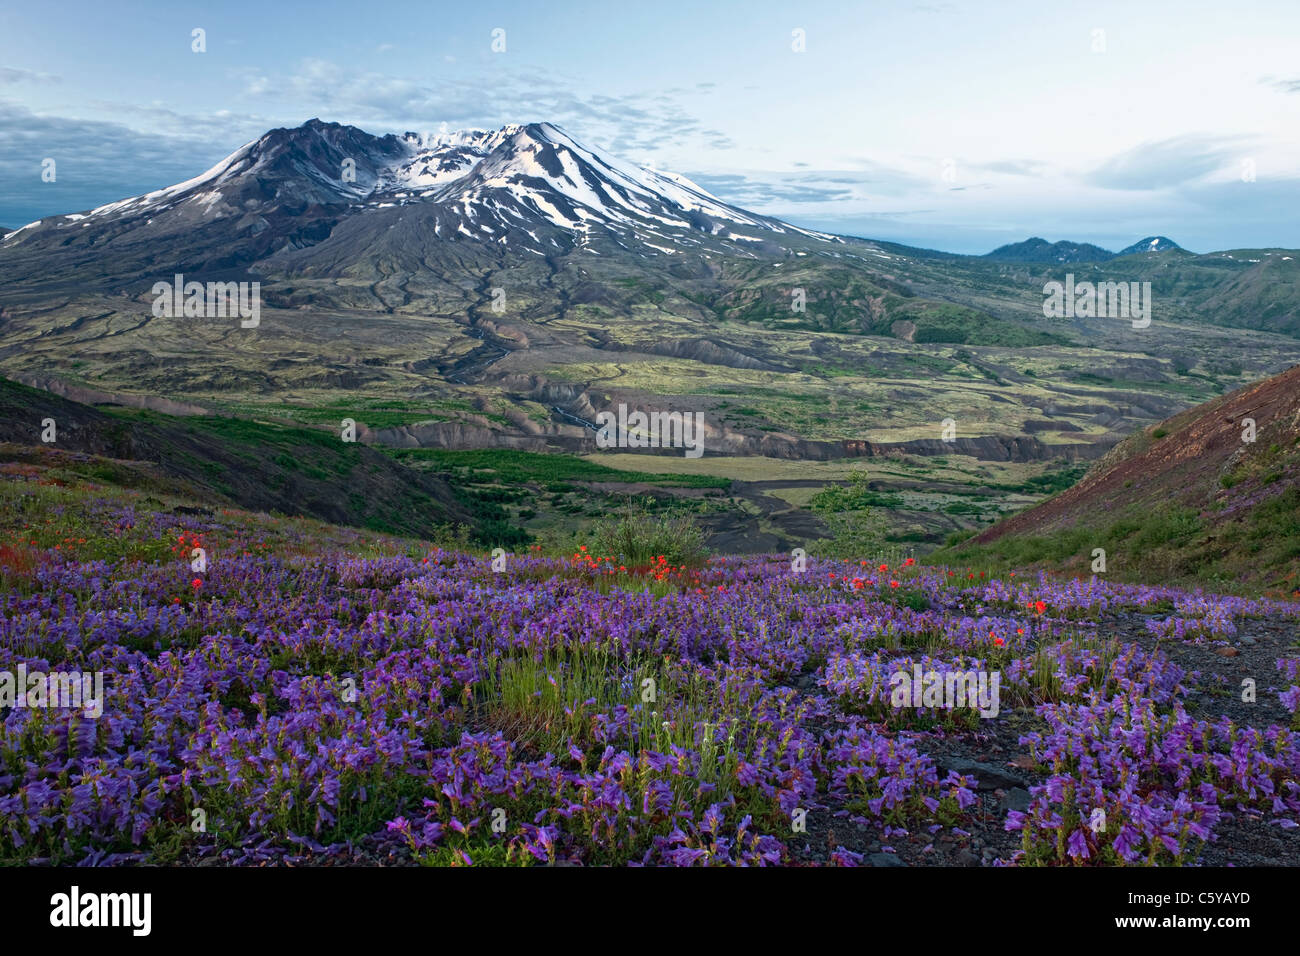 Dawn offenbart Sommer Wildblumen blühen entlang Johnston Ridge mit Blick auf Washingtons Mount St. Helens Nat vulkanischen Moument. Stockfoto